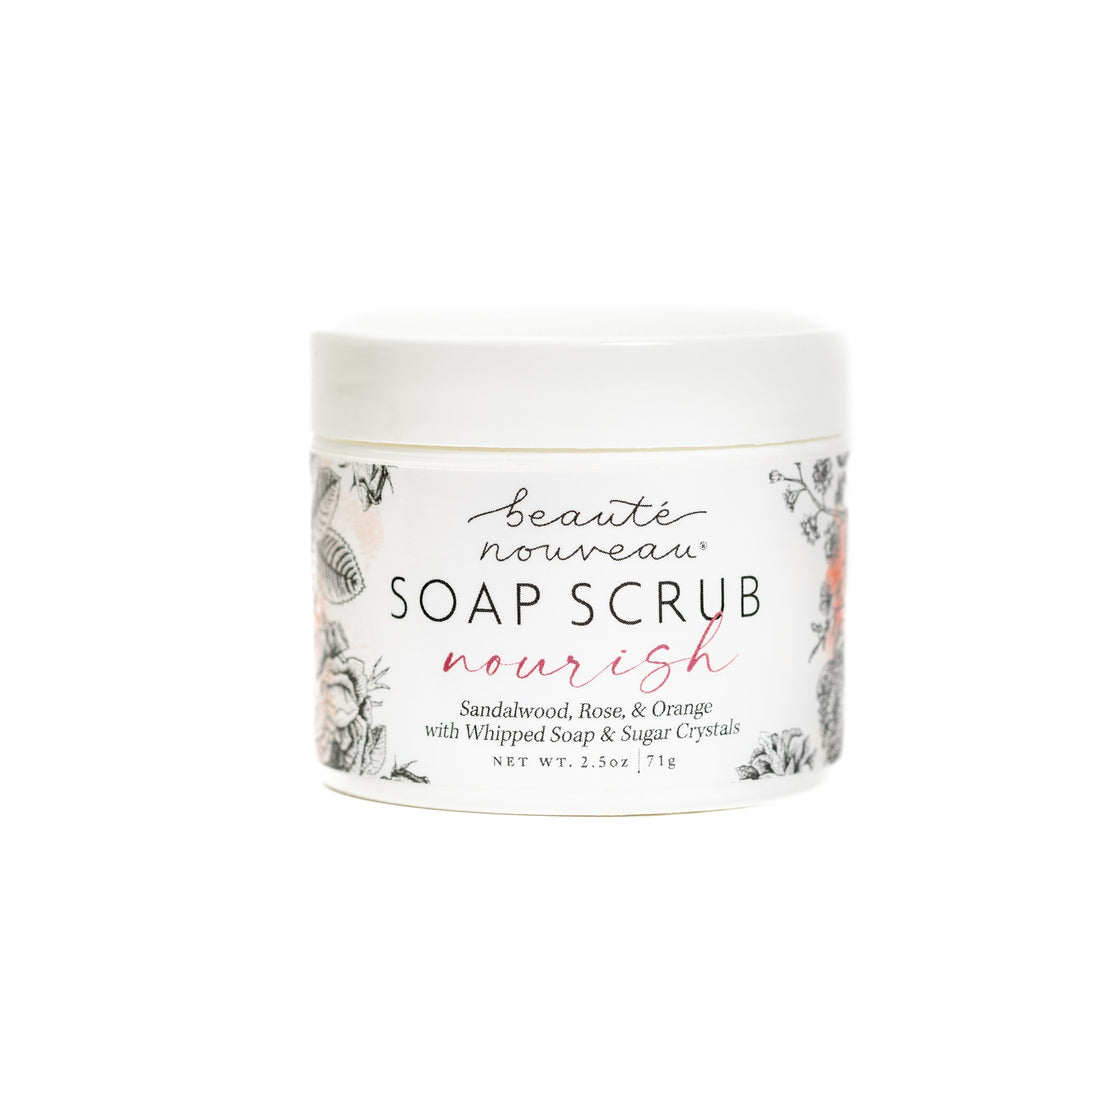 nourish soap scrub 2.25 oz